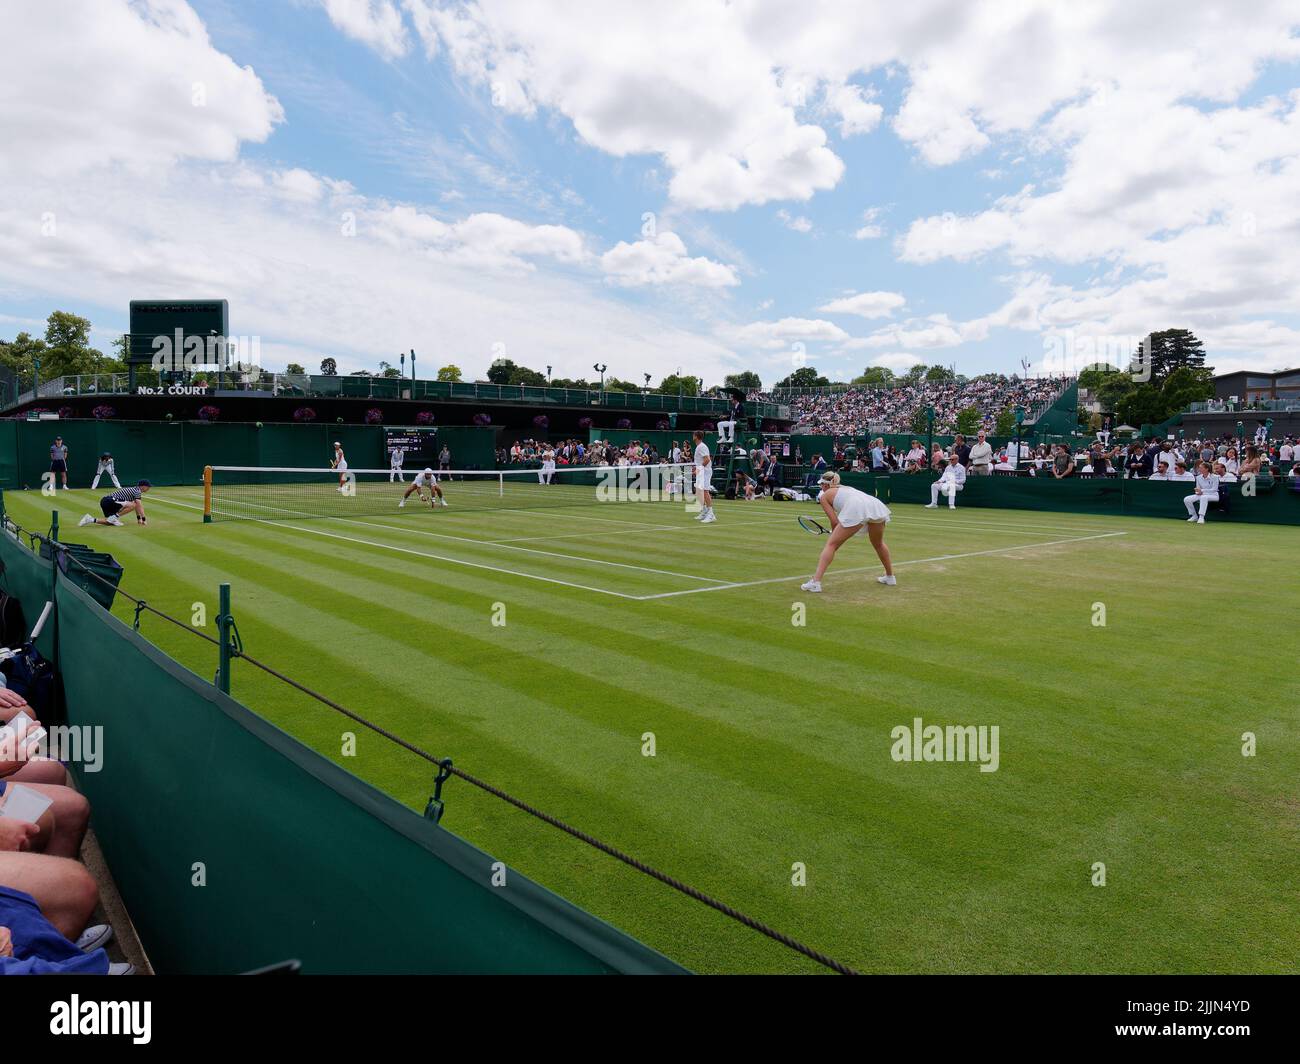 Wimbledon, Greater London, England, July 02 2022: Wimbledon Tennis Championship. Doubles match in progress. Stock Photo